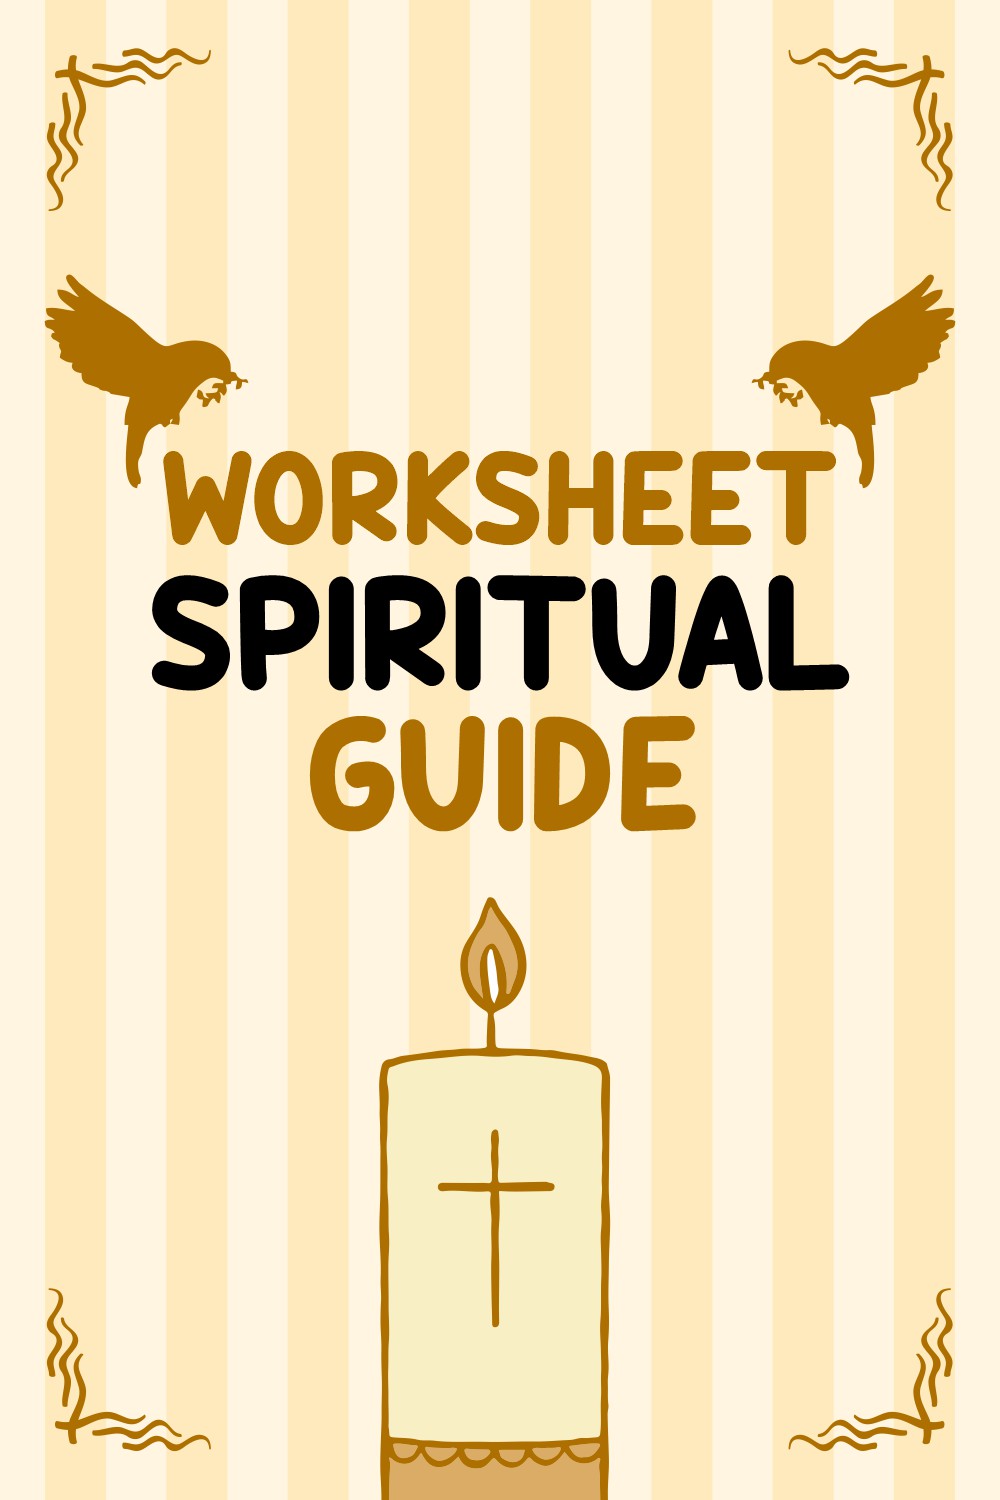 Worksheet Spiritual Guide